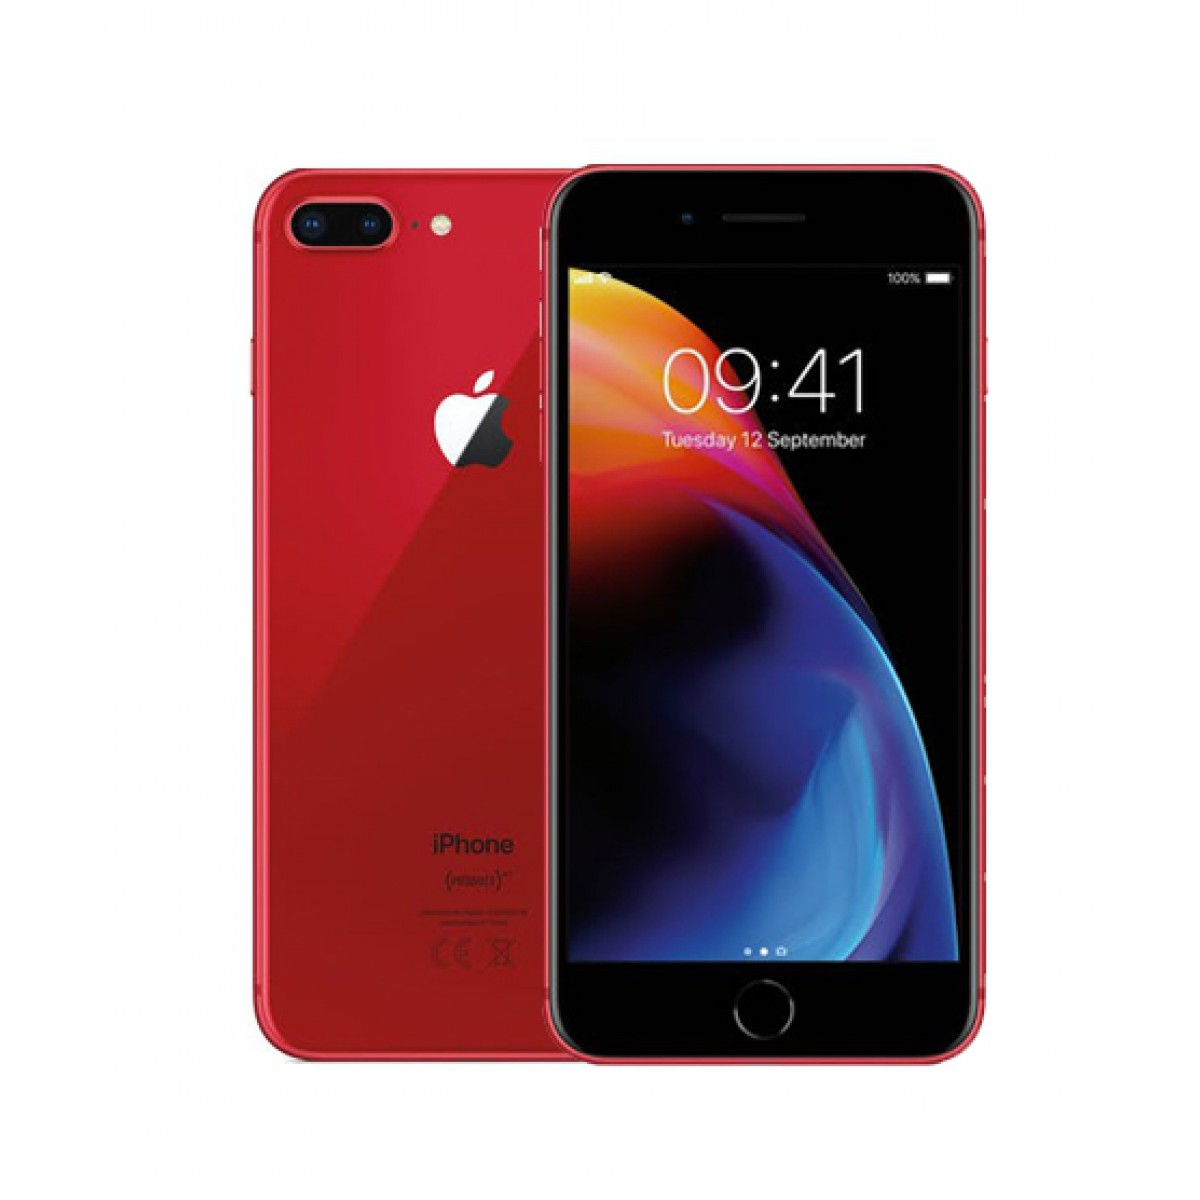 Apple iPhone 8 Plus (PRODUCT)RED - 64GB - (Verizon) A1864 (CDMA + 